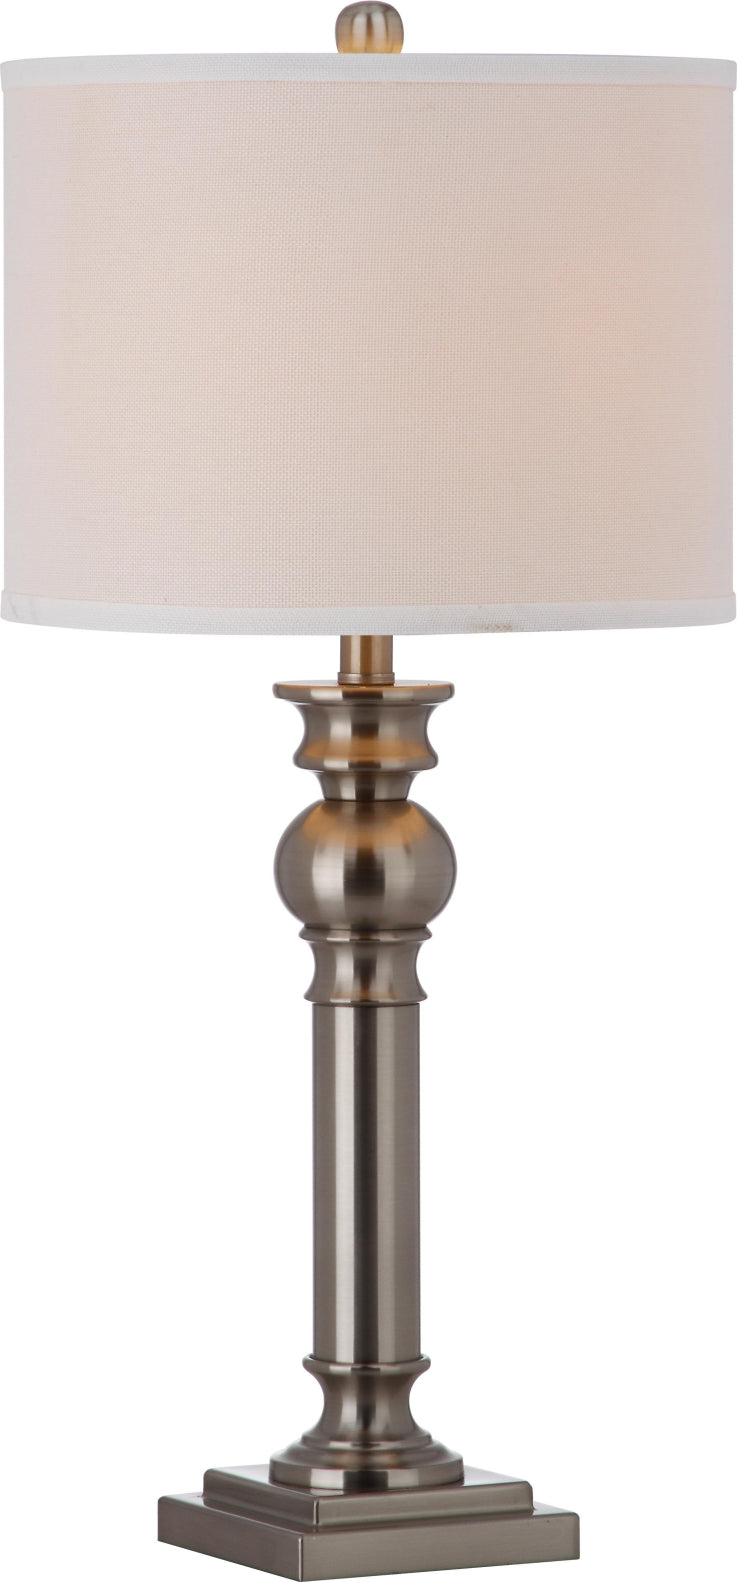 Safavieh Argos 2825-Inch H Column Table Lamp Nickel Mirror main image